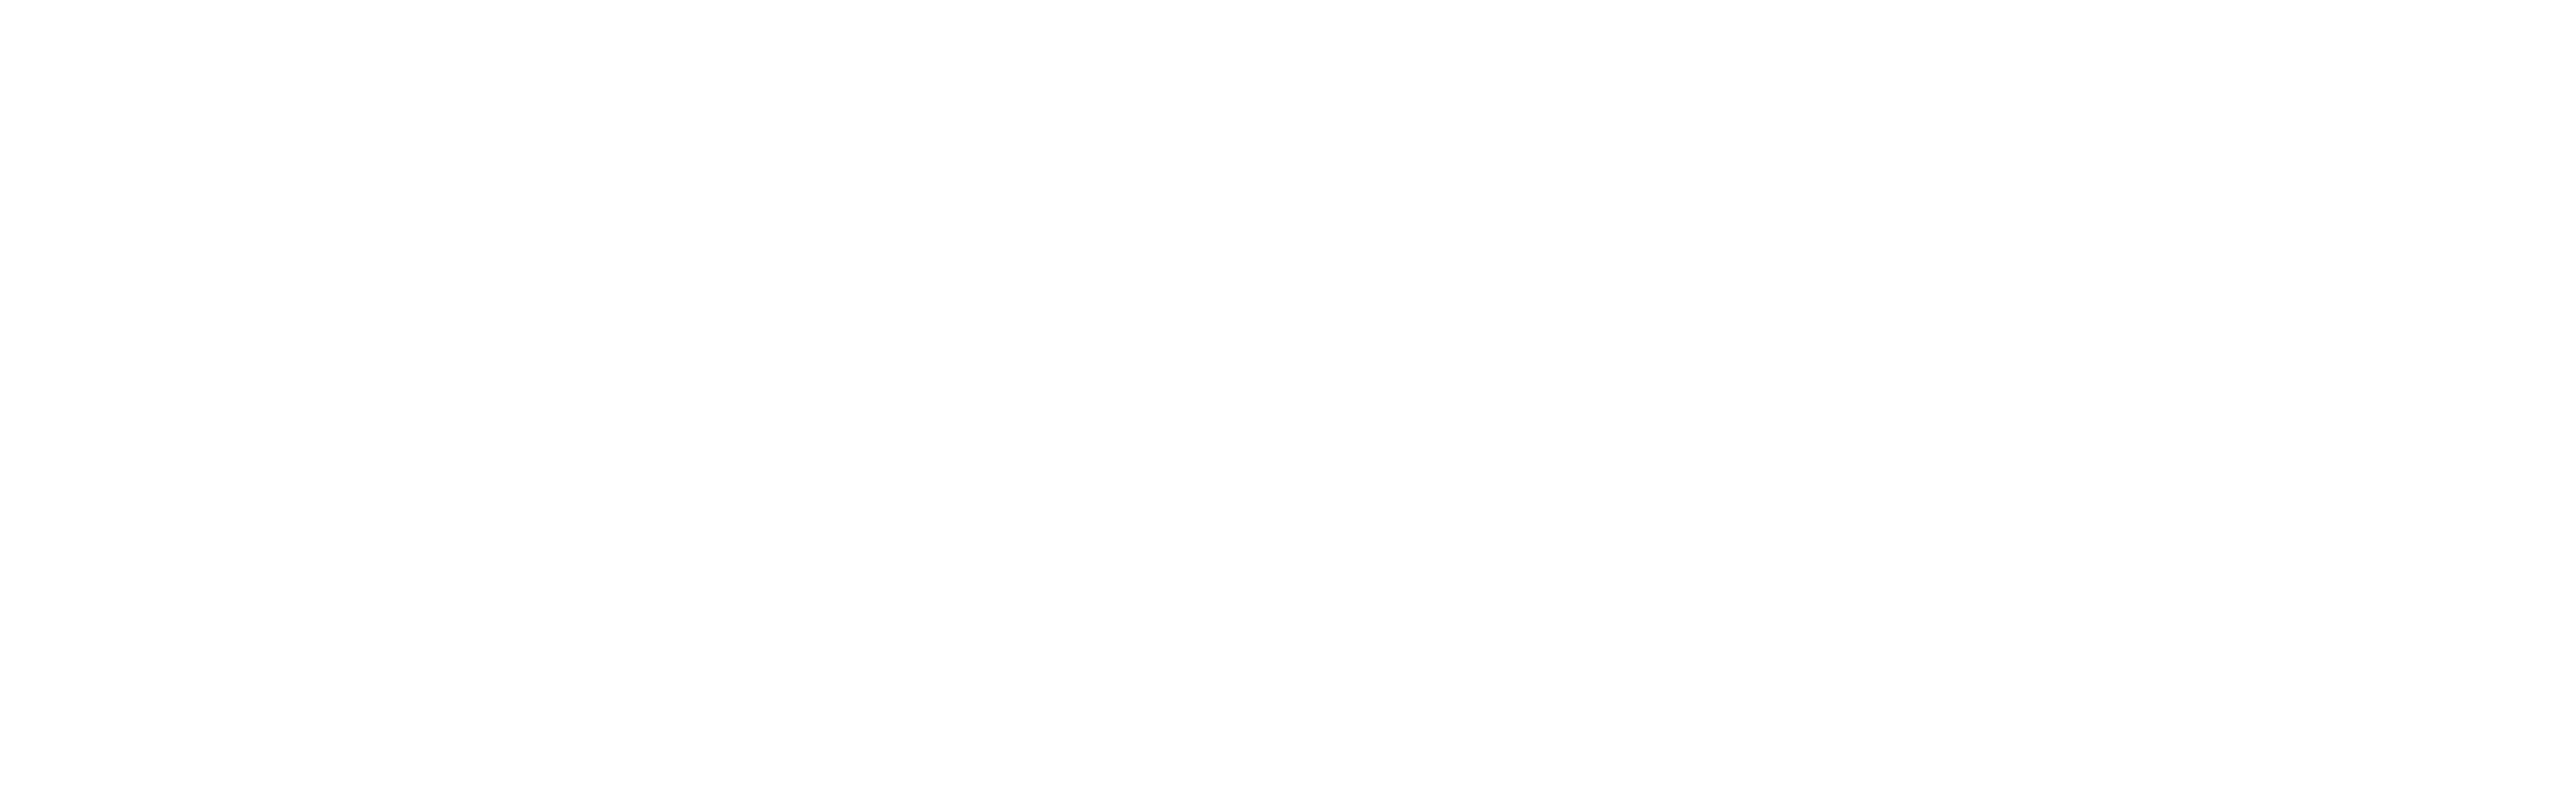 Clear Choice Creative Corp.